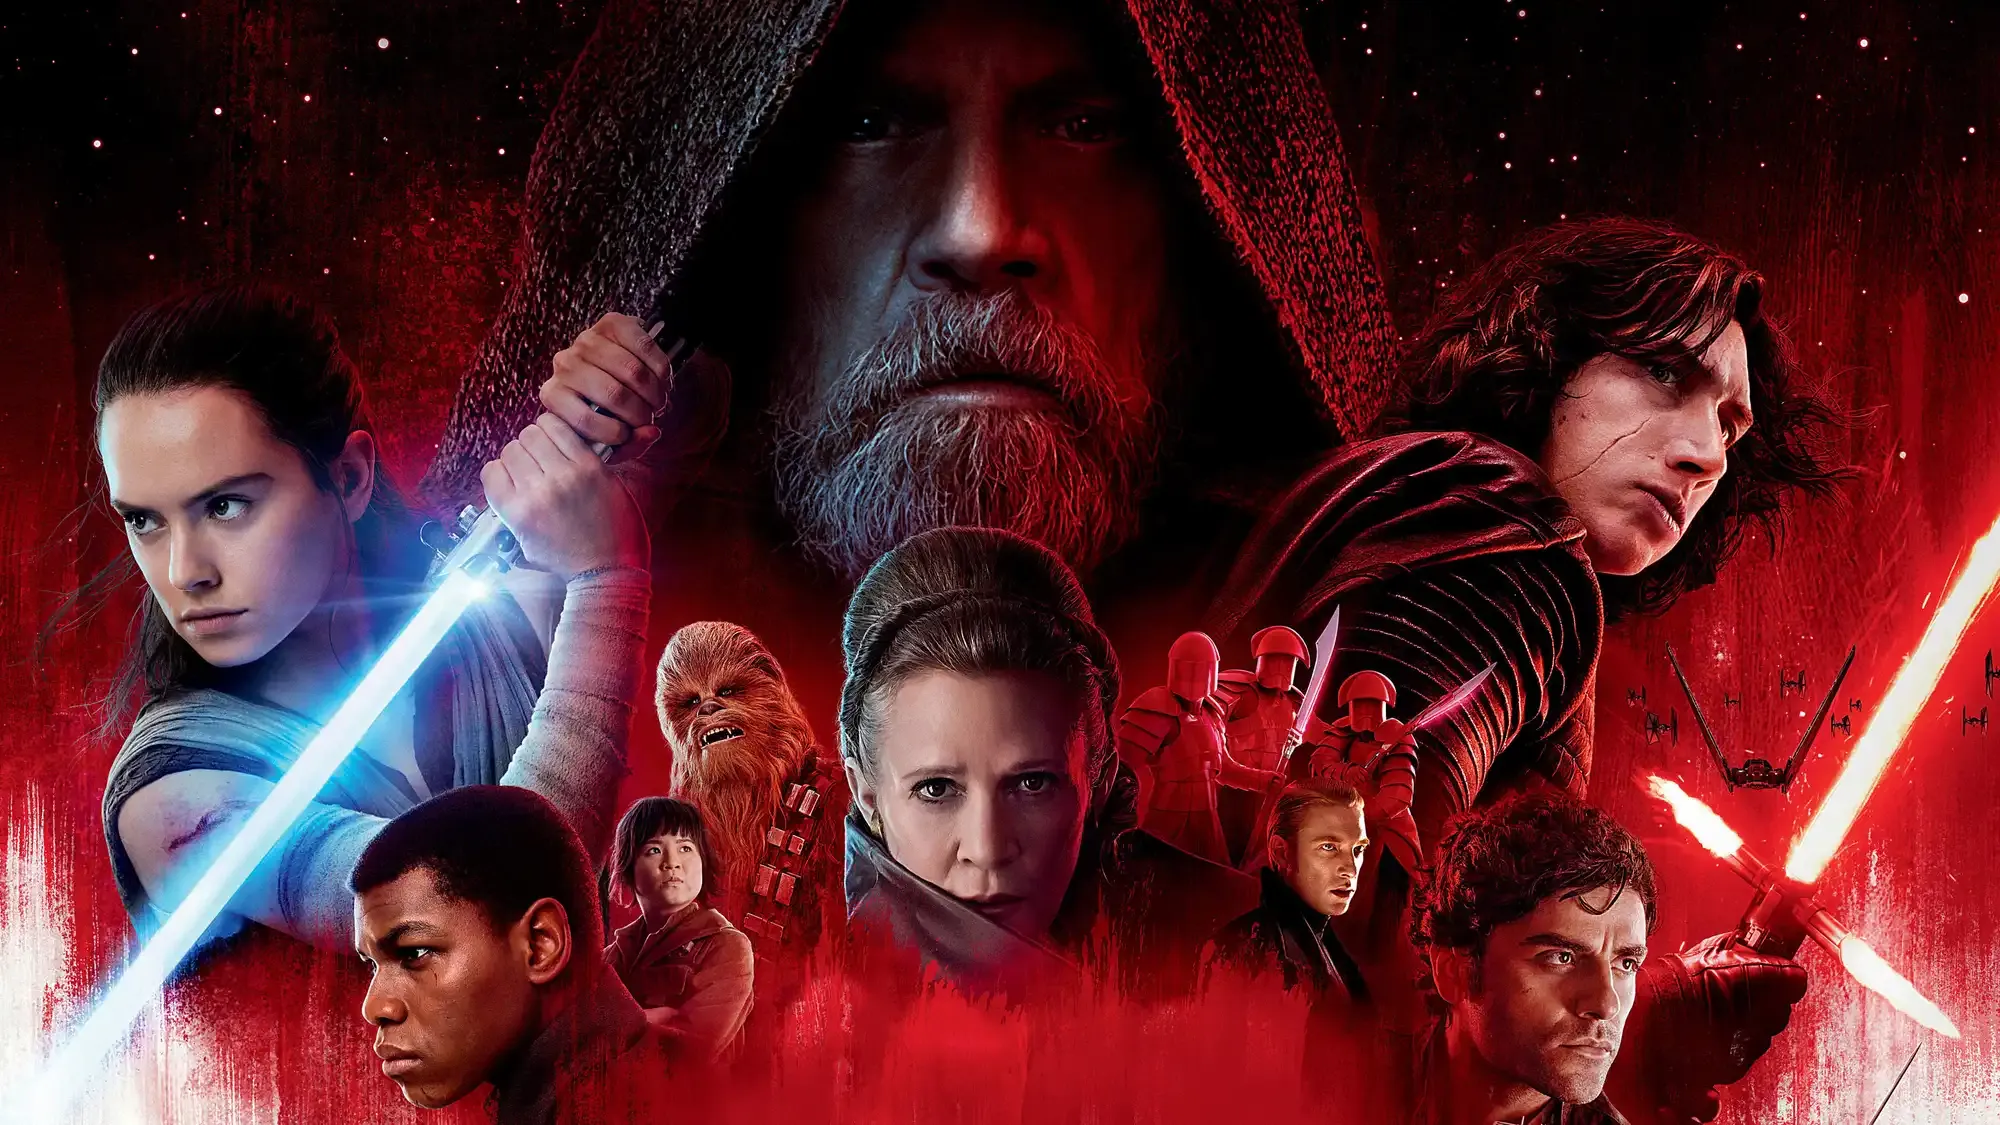 Star Wars: The Last Jedi movie review